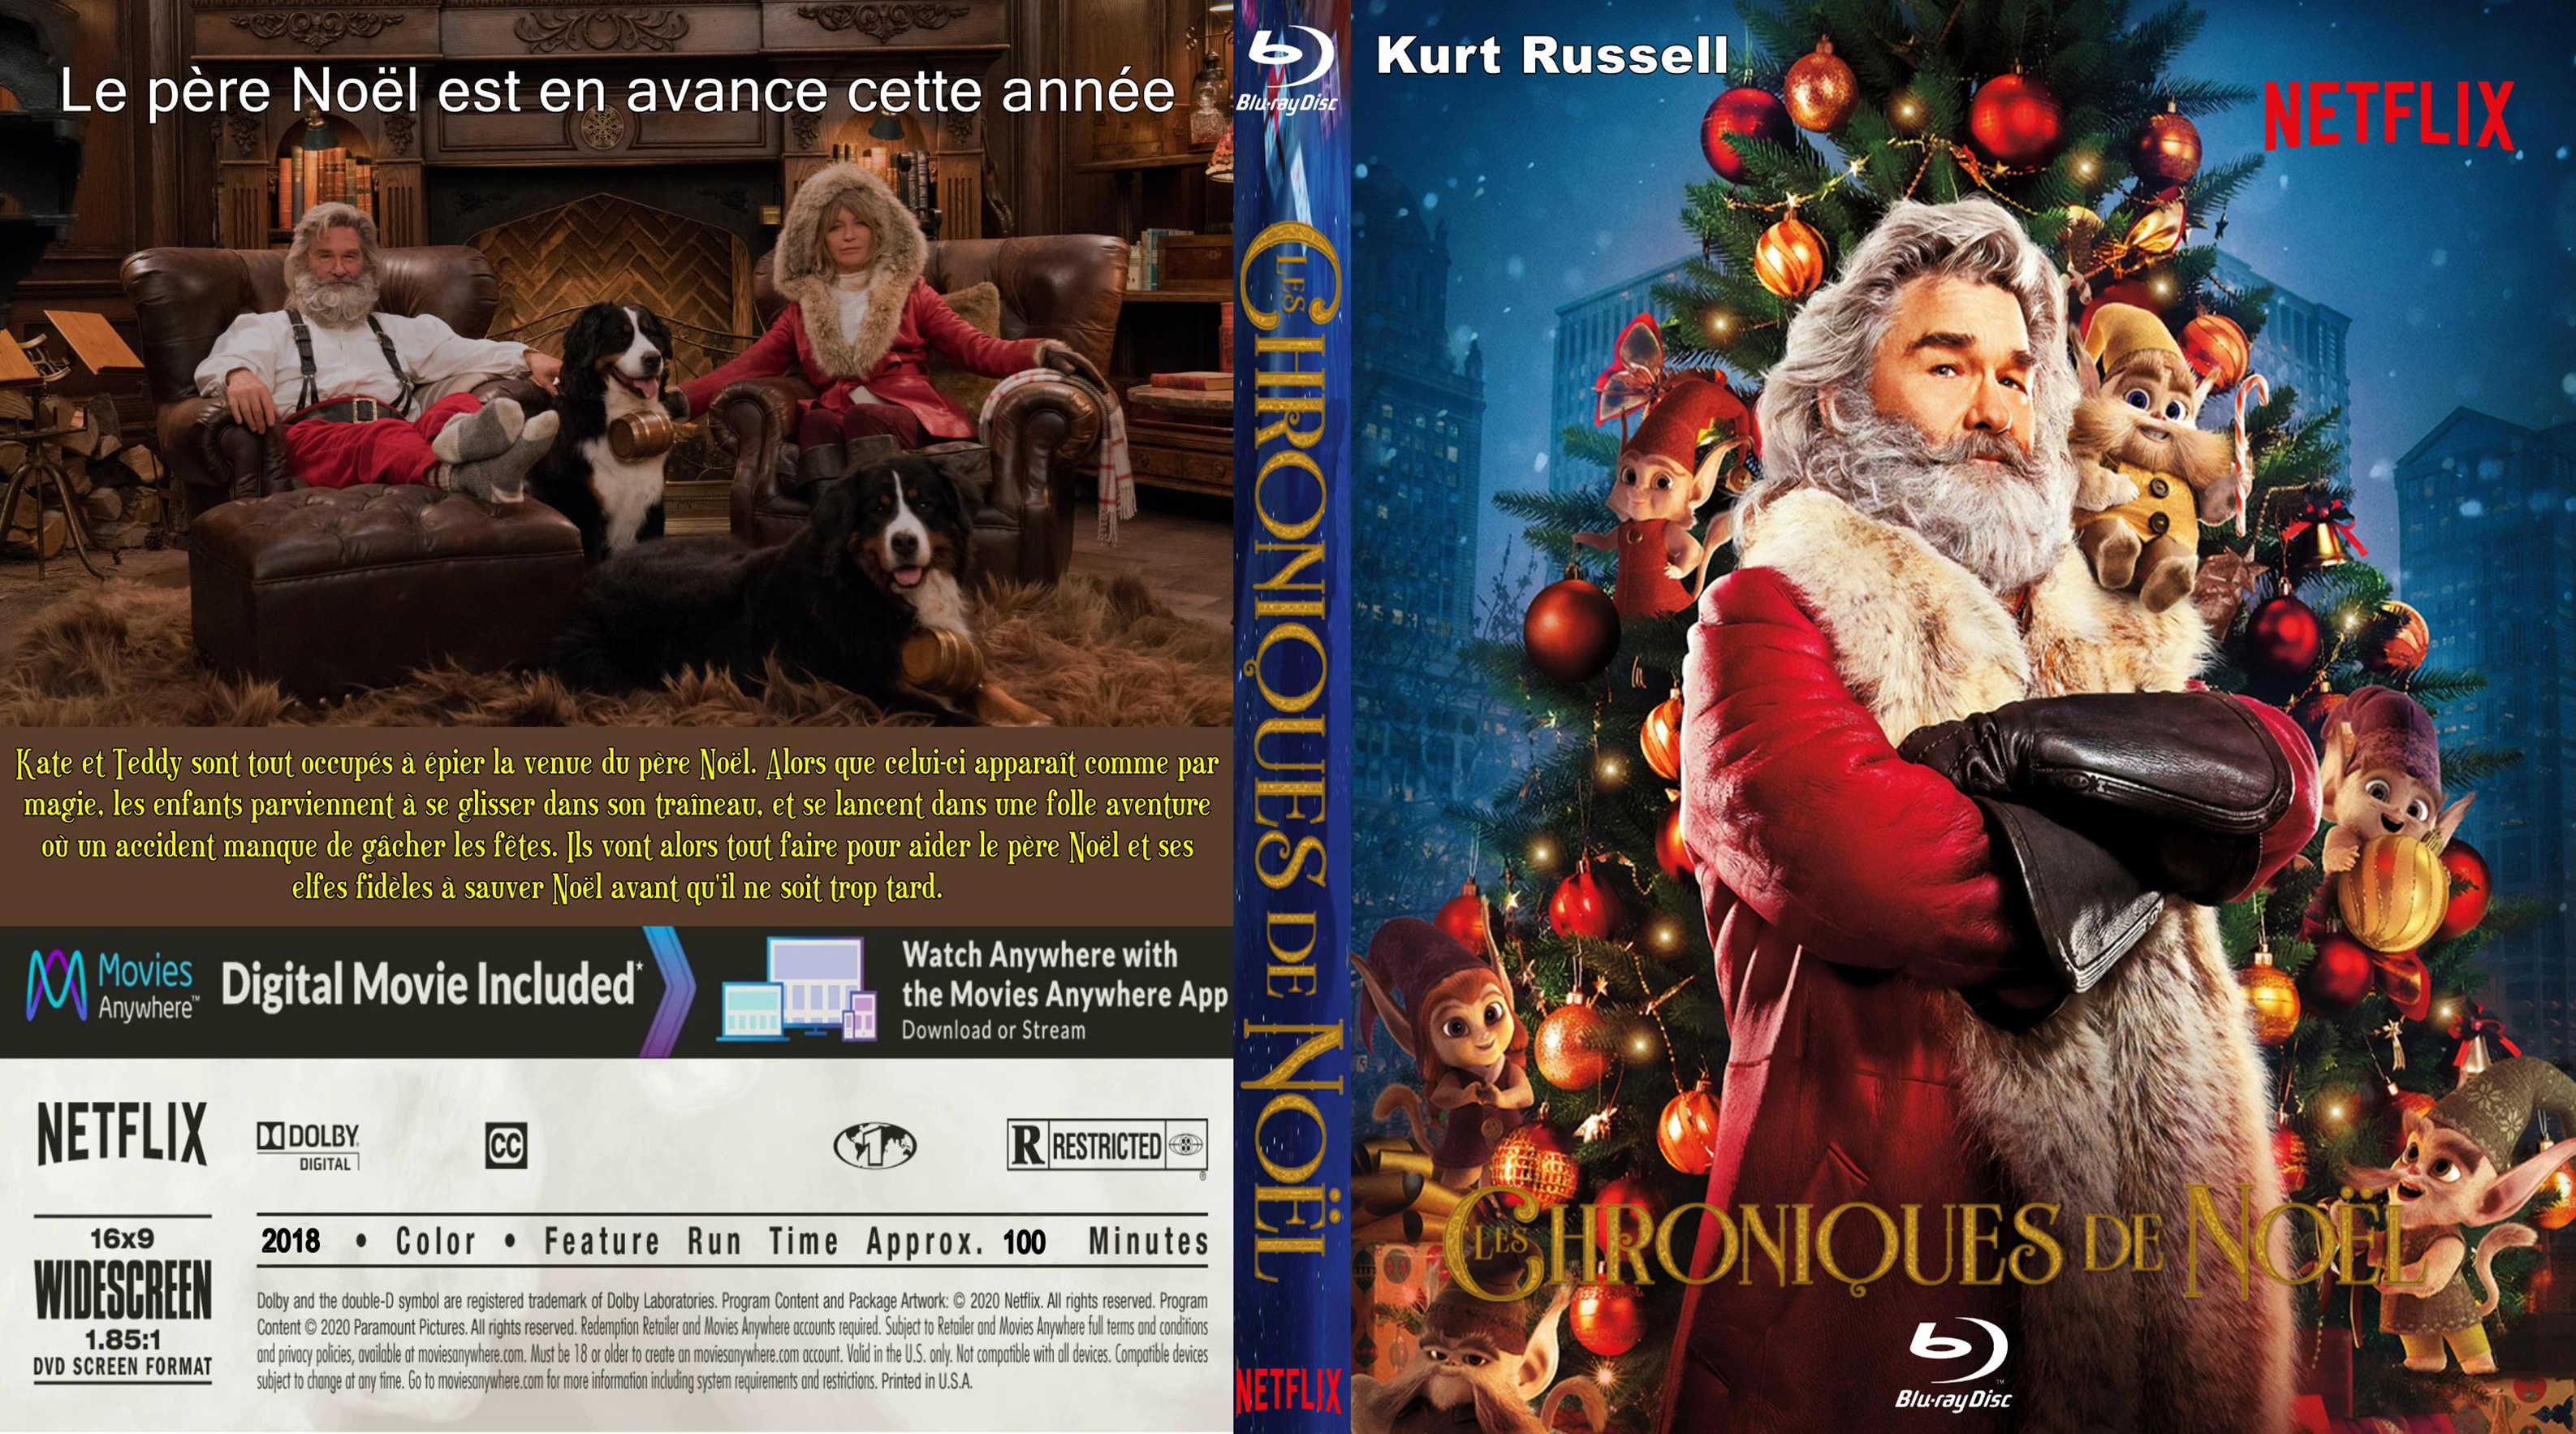 Jaquette DVD Les chroniques de noel custom (BLU-RAY)